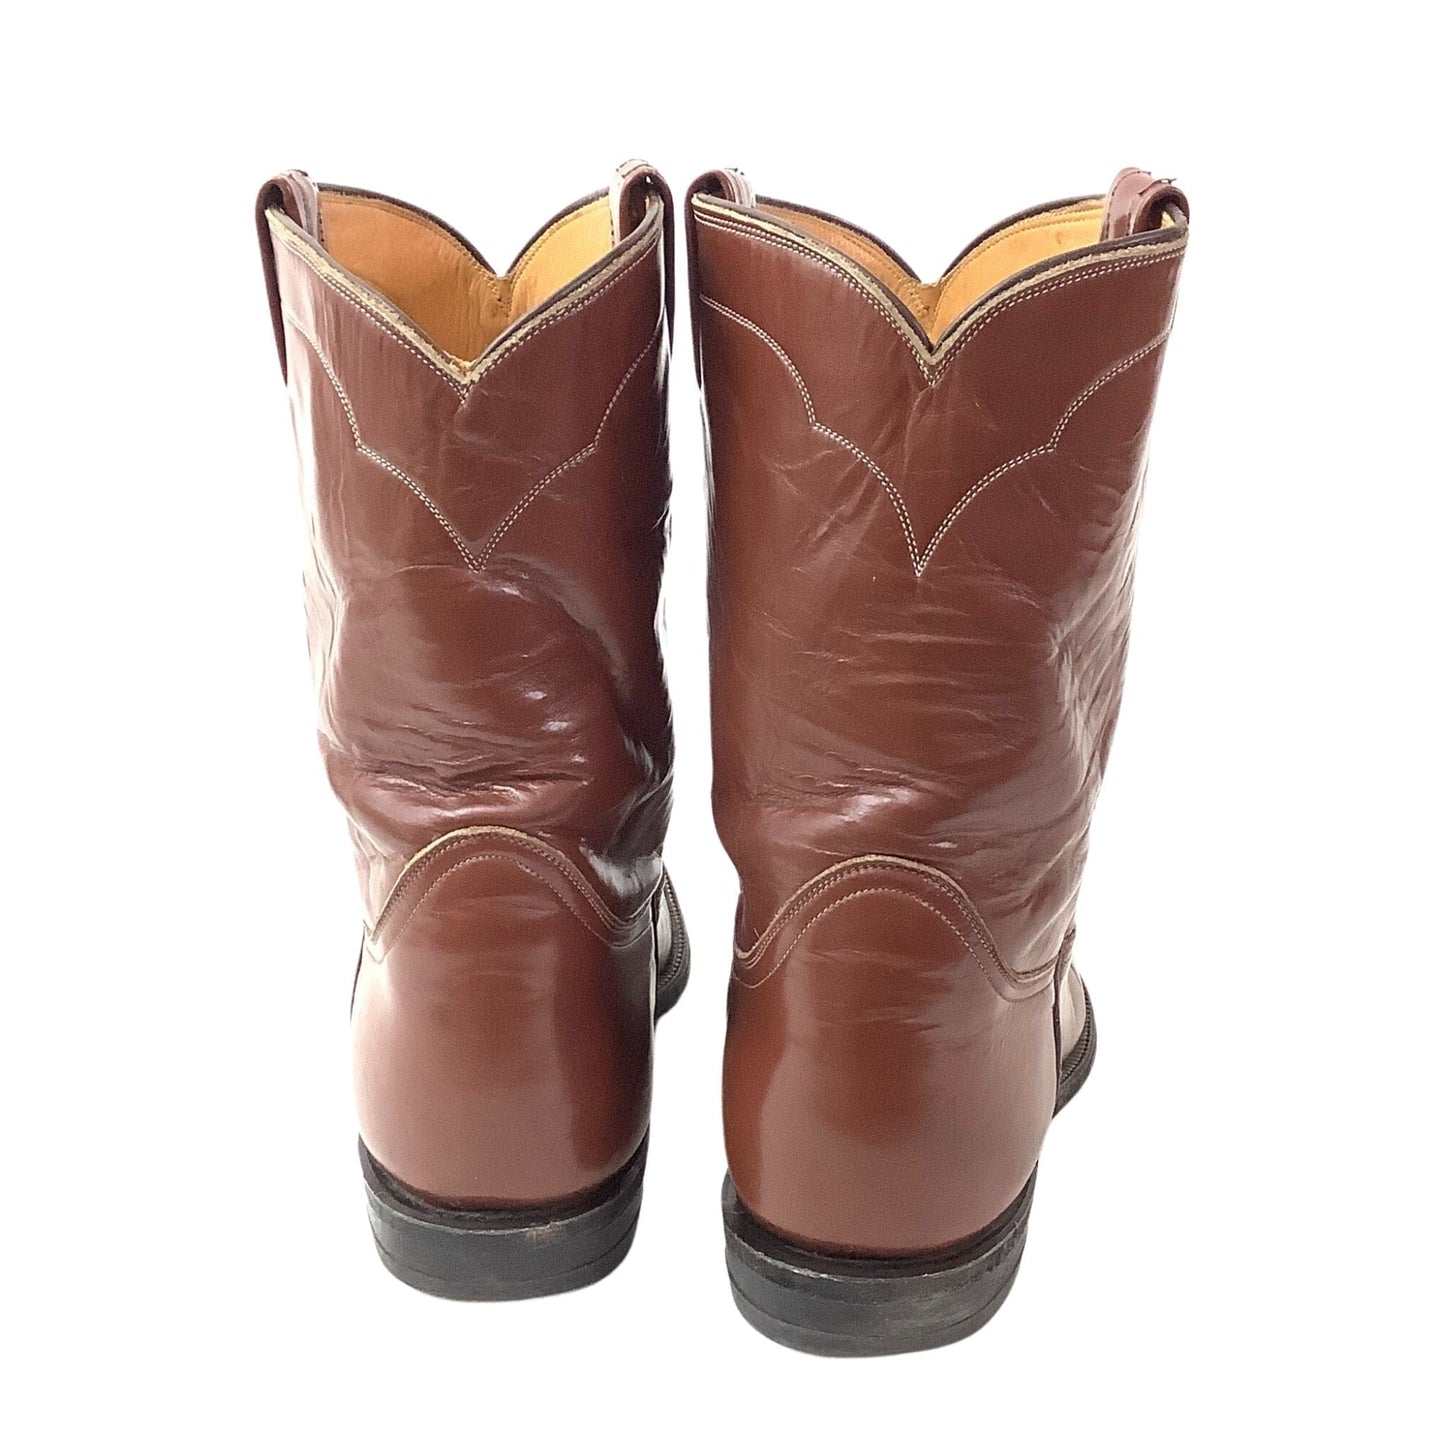 Tony Lama Ranch Boots 10 / Brown / Vintage 1960s